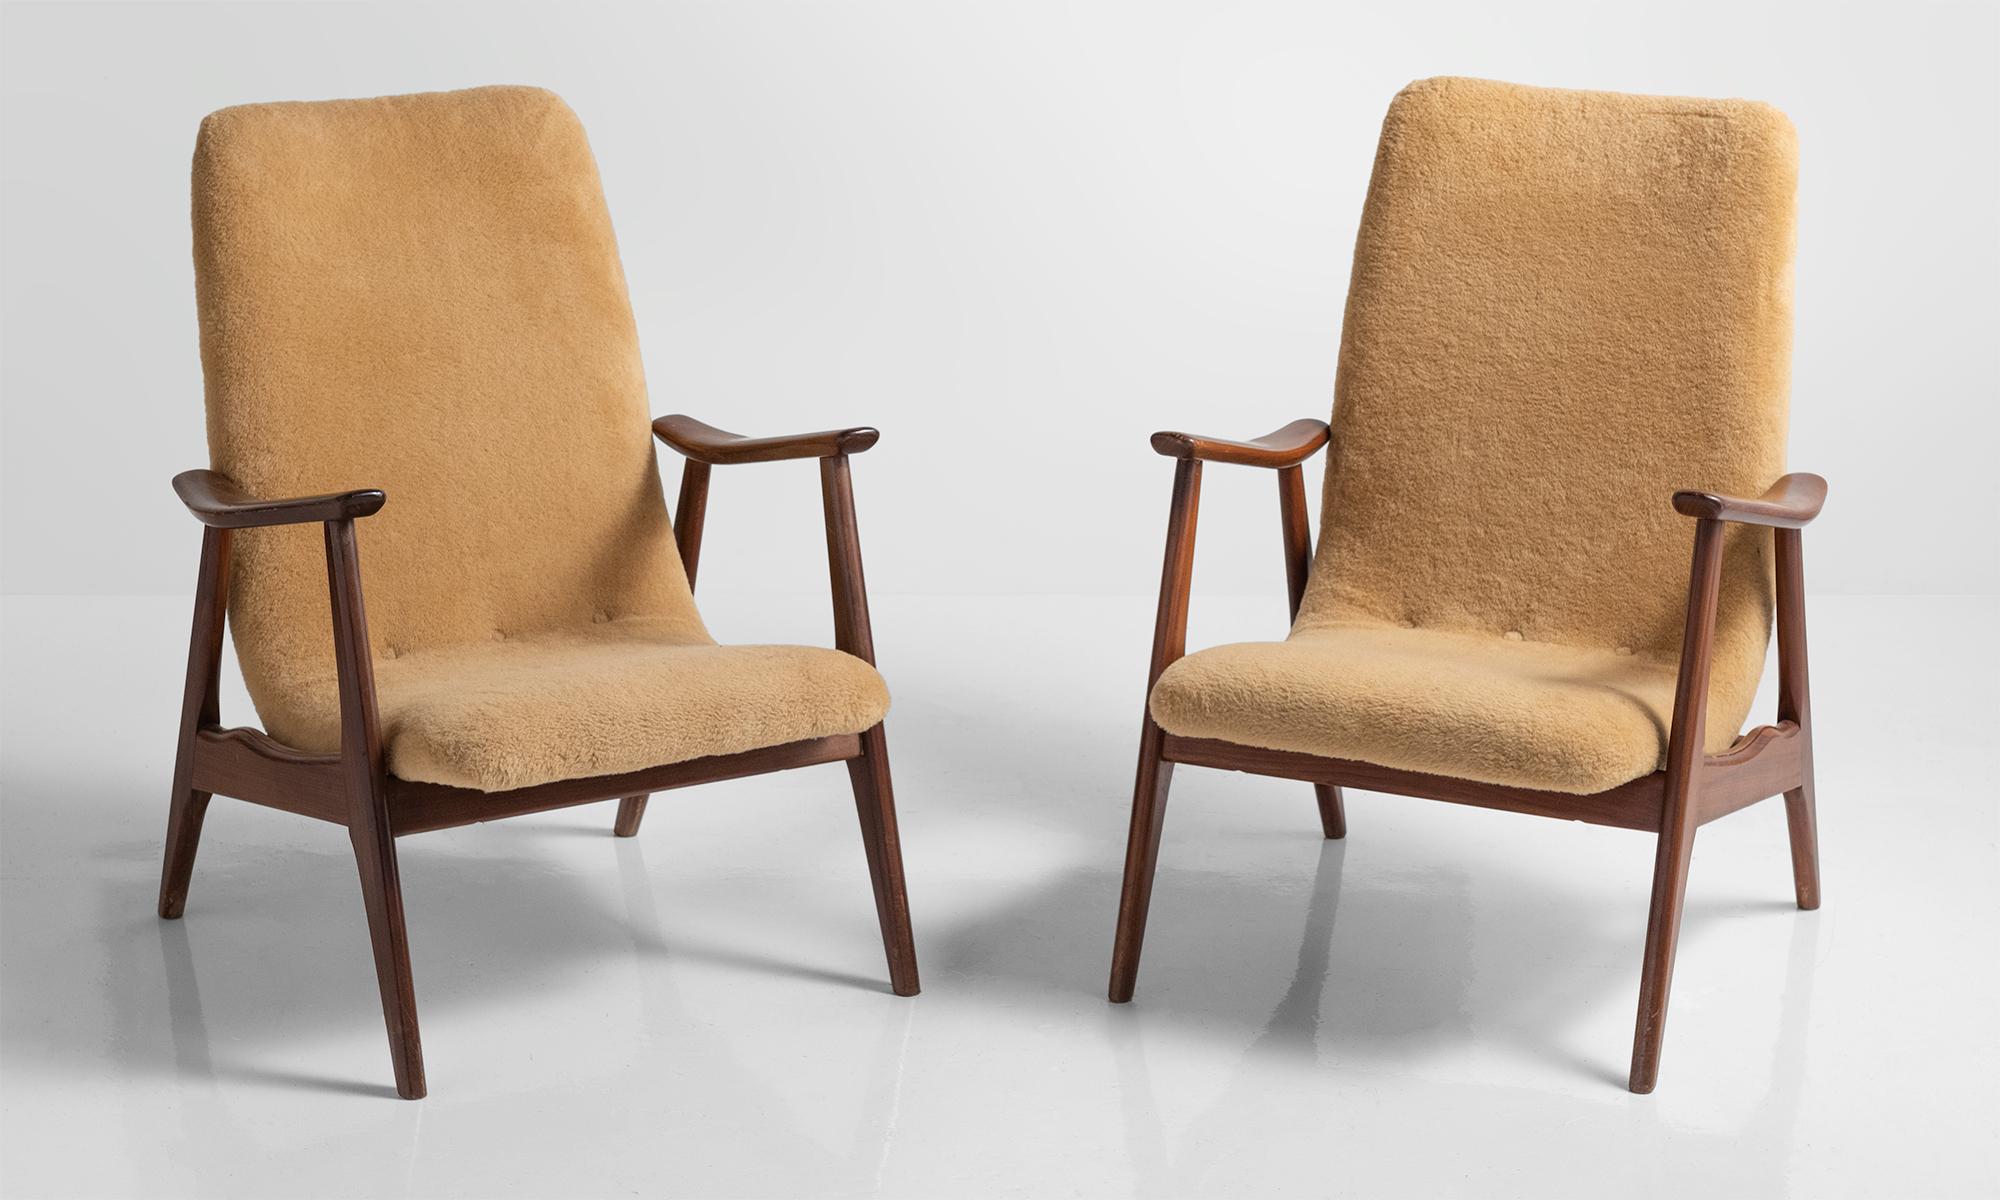 Pair of modern sheepskin armchairs, Sweden, circa 1950.

Pair of Scandinavian forms with teak frame and original sheepskin upholstery.